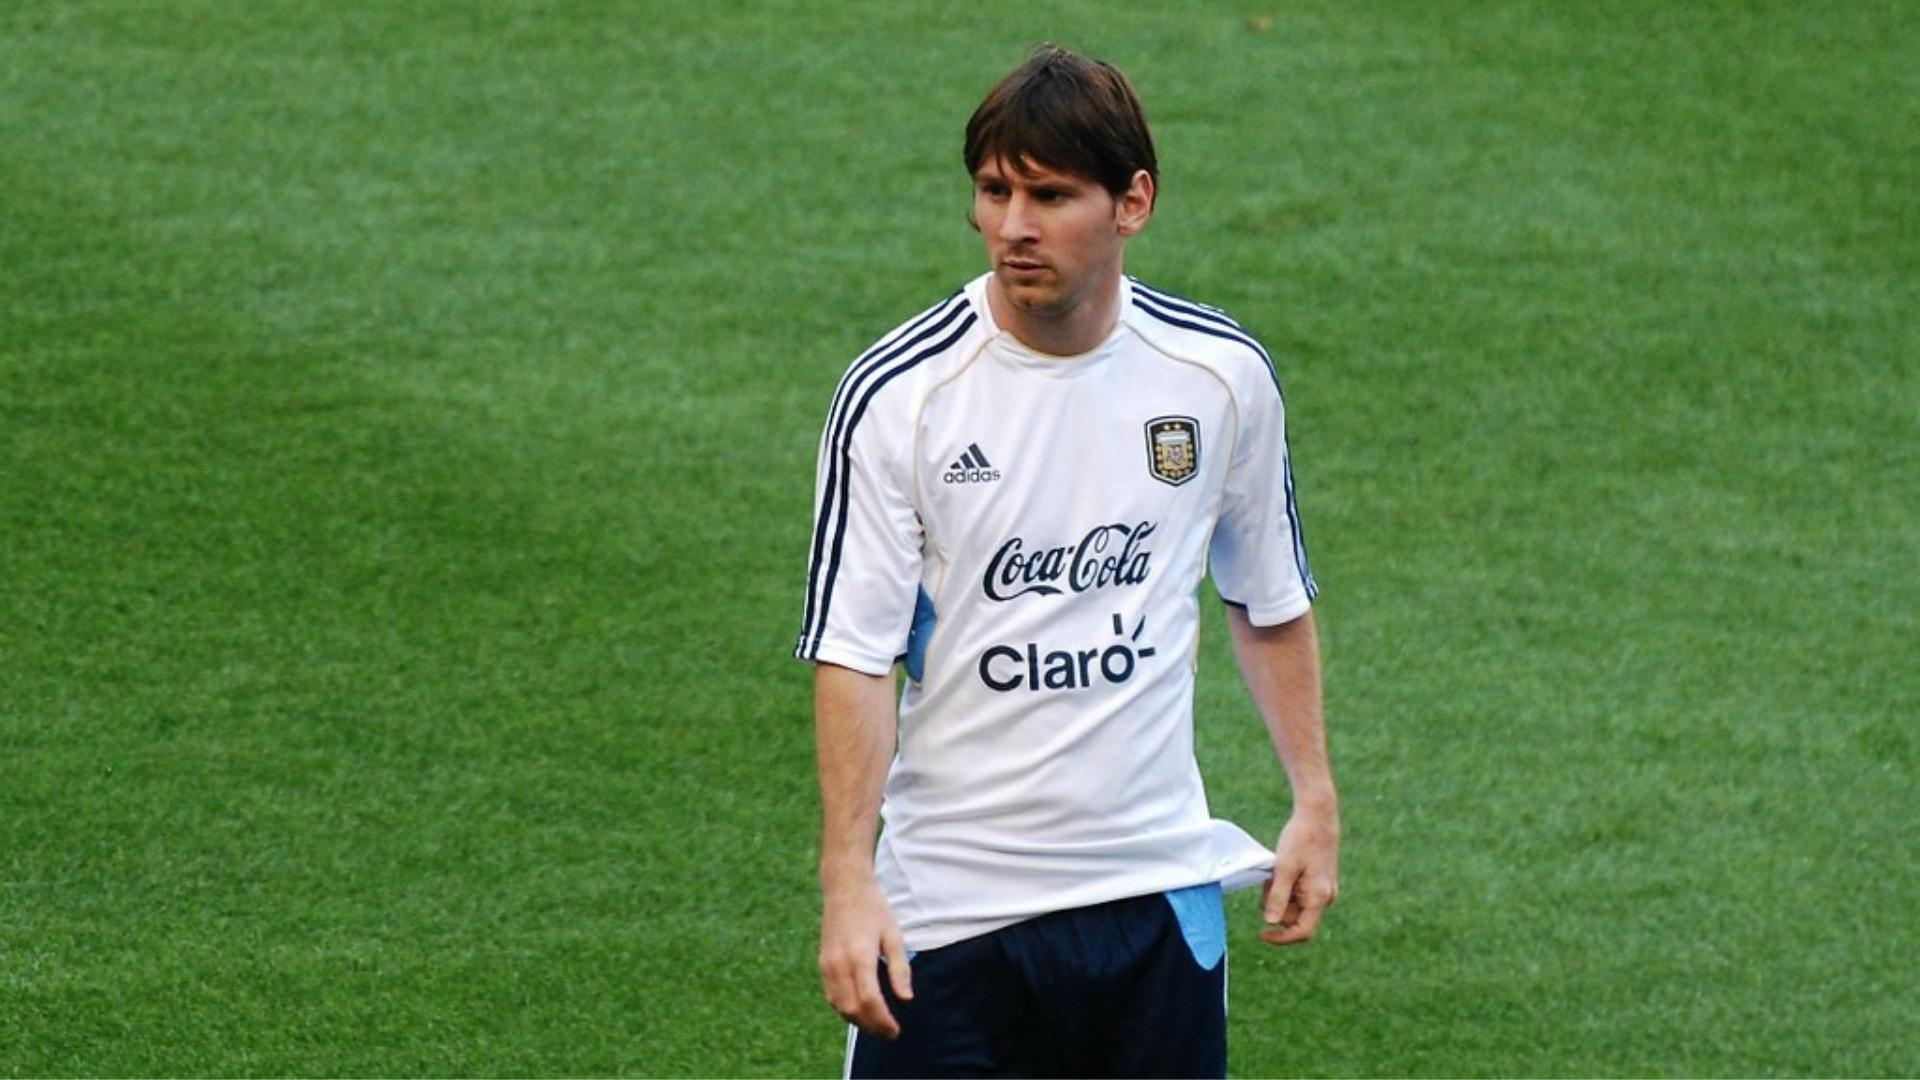 Messi vistiendo uniforme de Argentina. Foto: Joscarfas